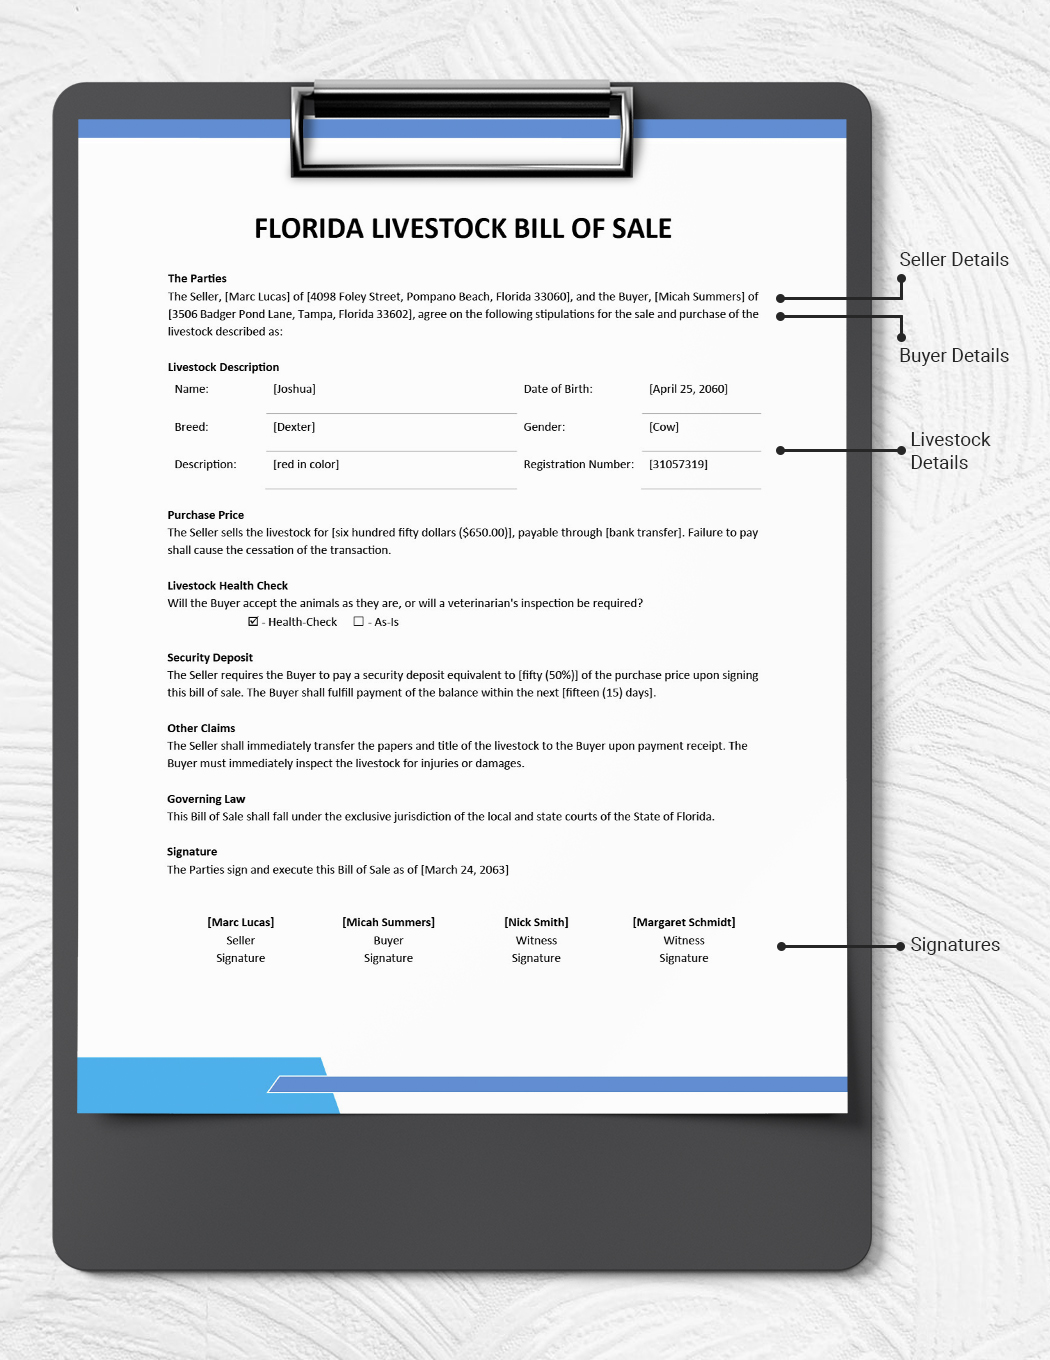 Florida Livestock Bill of Sale Template